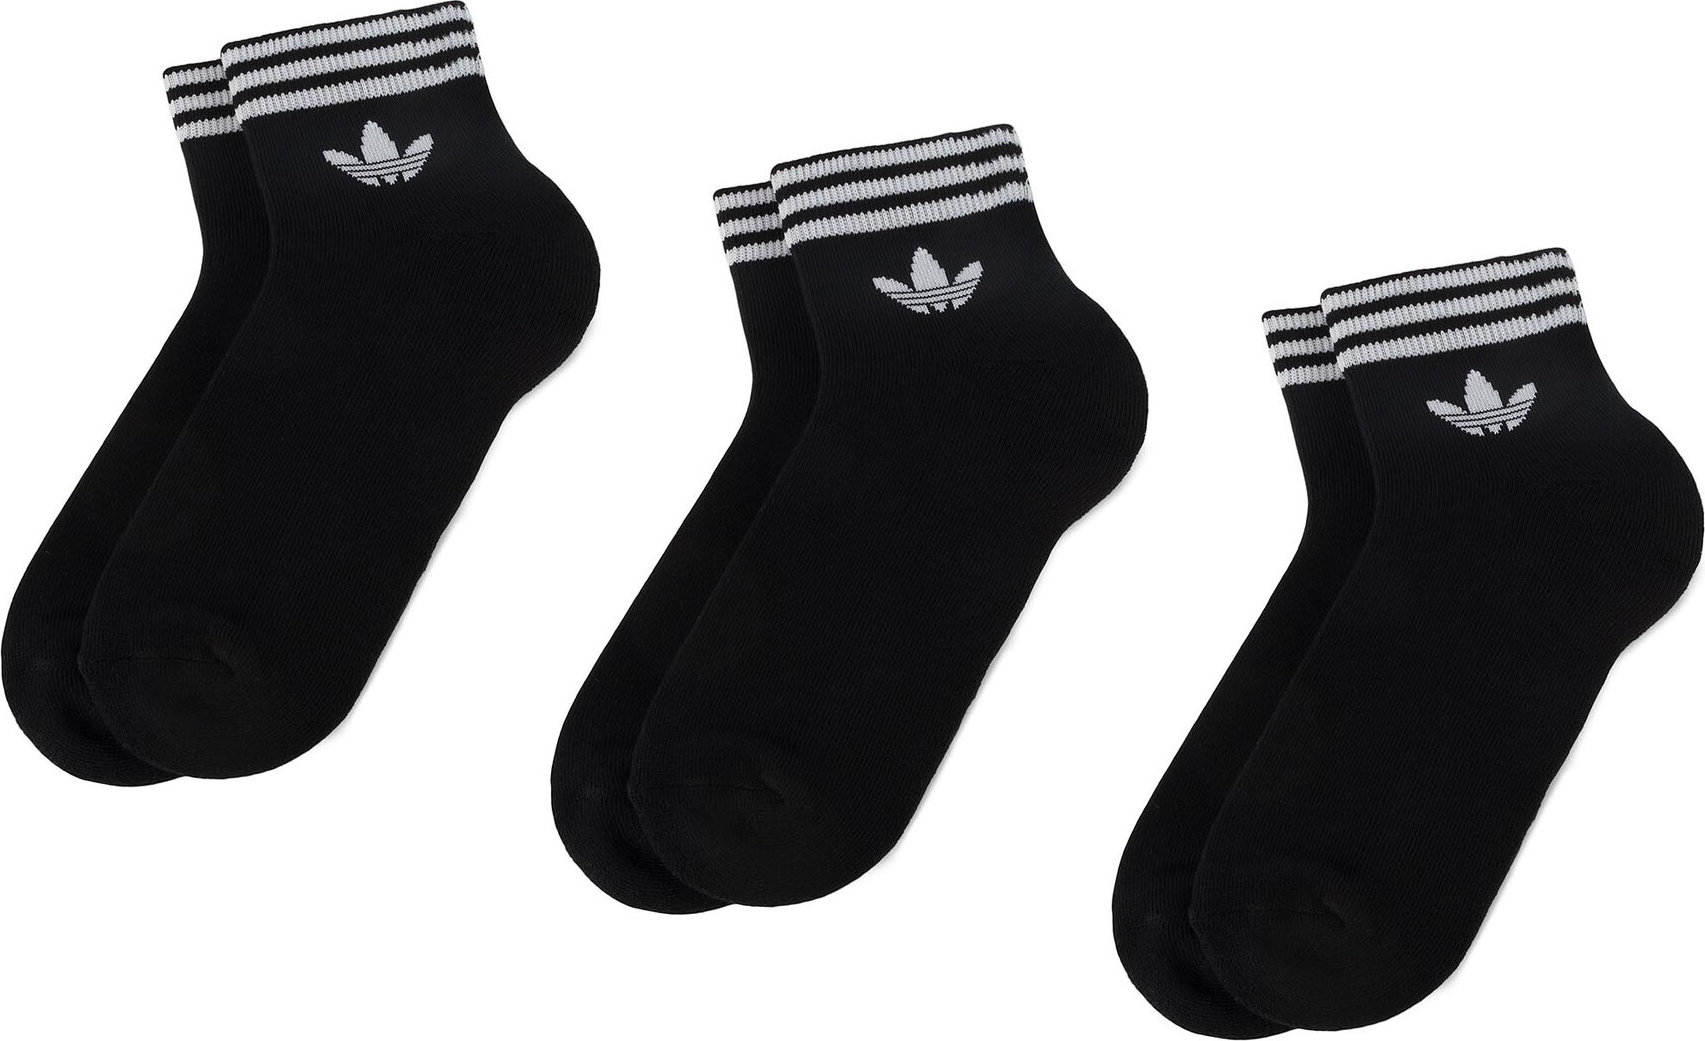 Sada 3 párů nízkých ponožek unisex adidas Tref Ank Sck Hc EE1151 Black/White